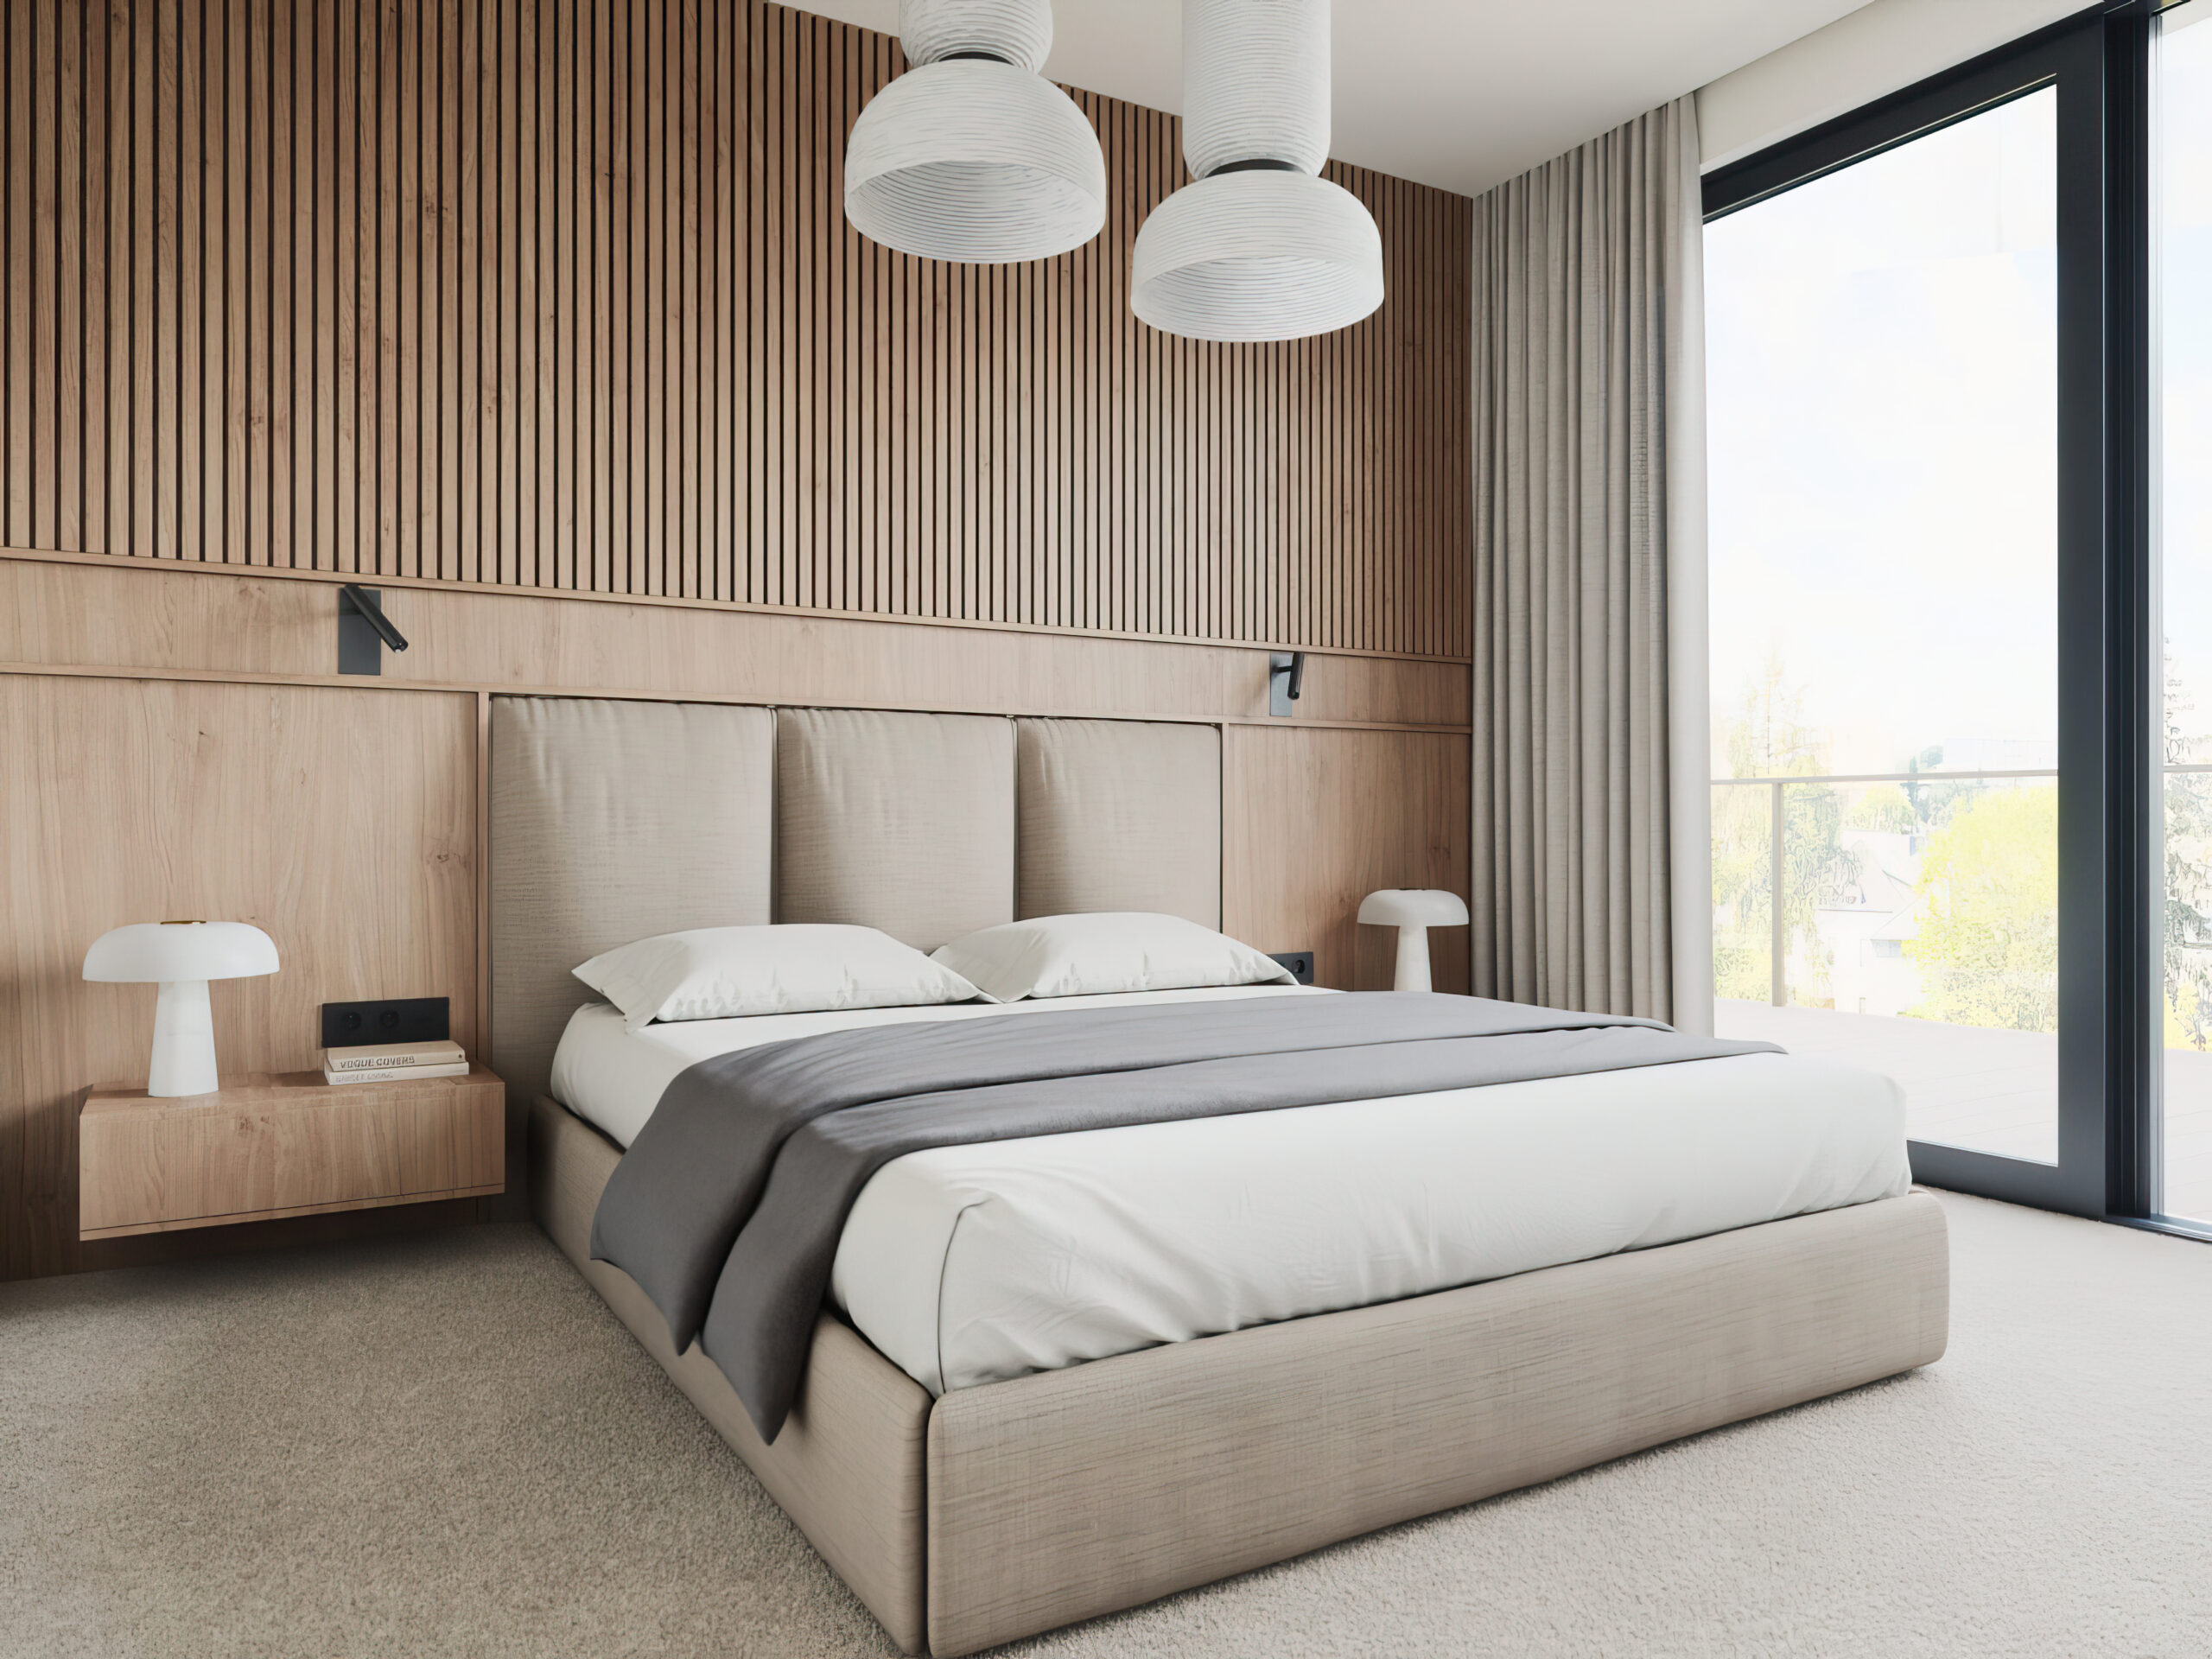 beautiful-rooms-with-sleek-modern-designs